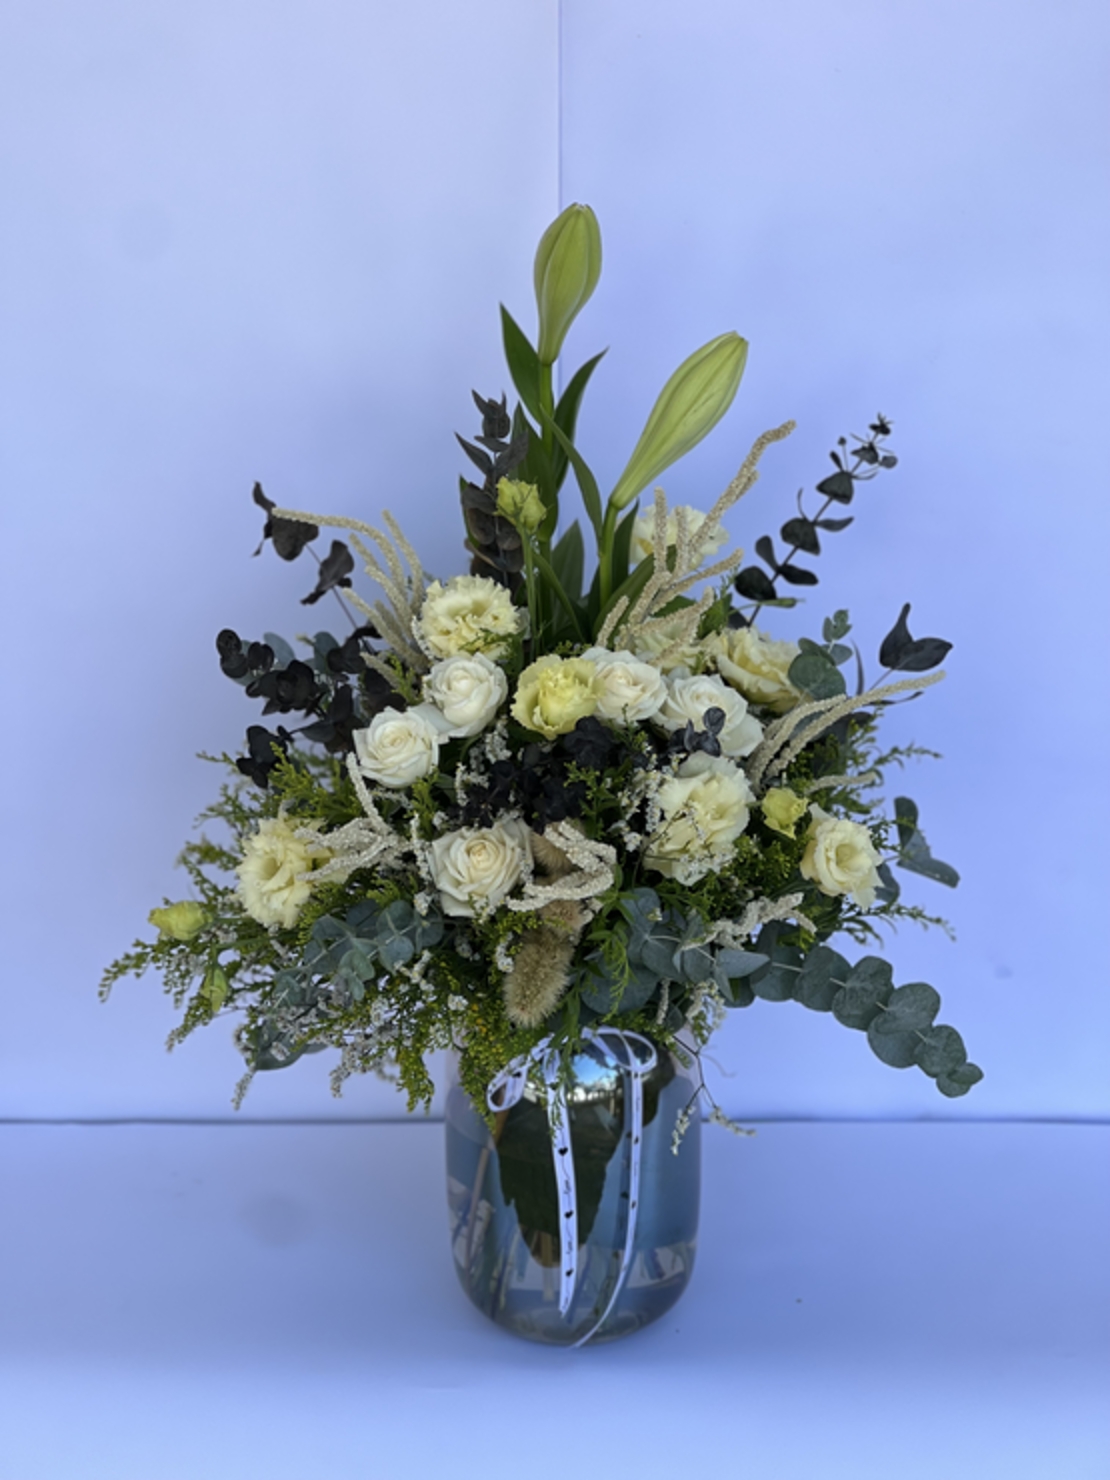 A classic flower arrangement in a vase